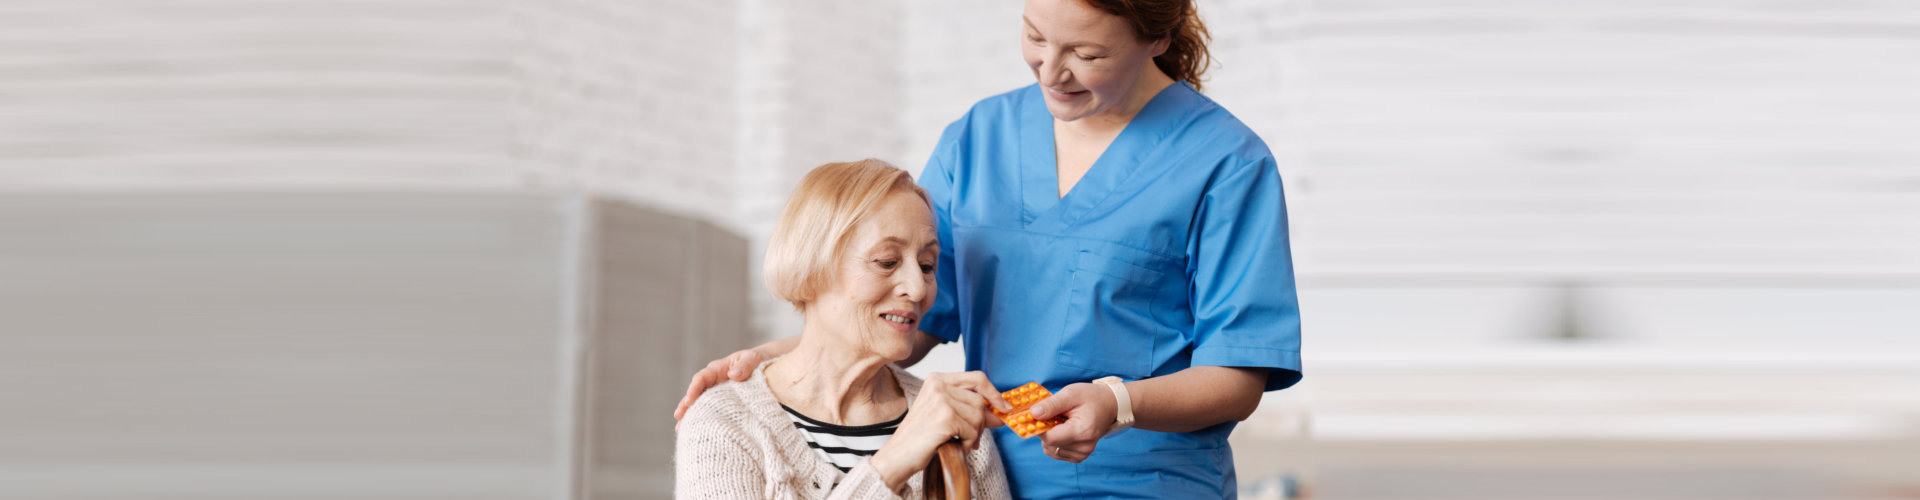 caregiver giving medicine to senior woman